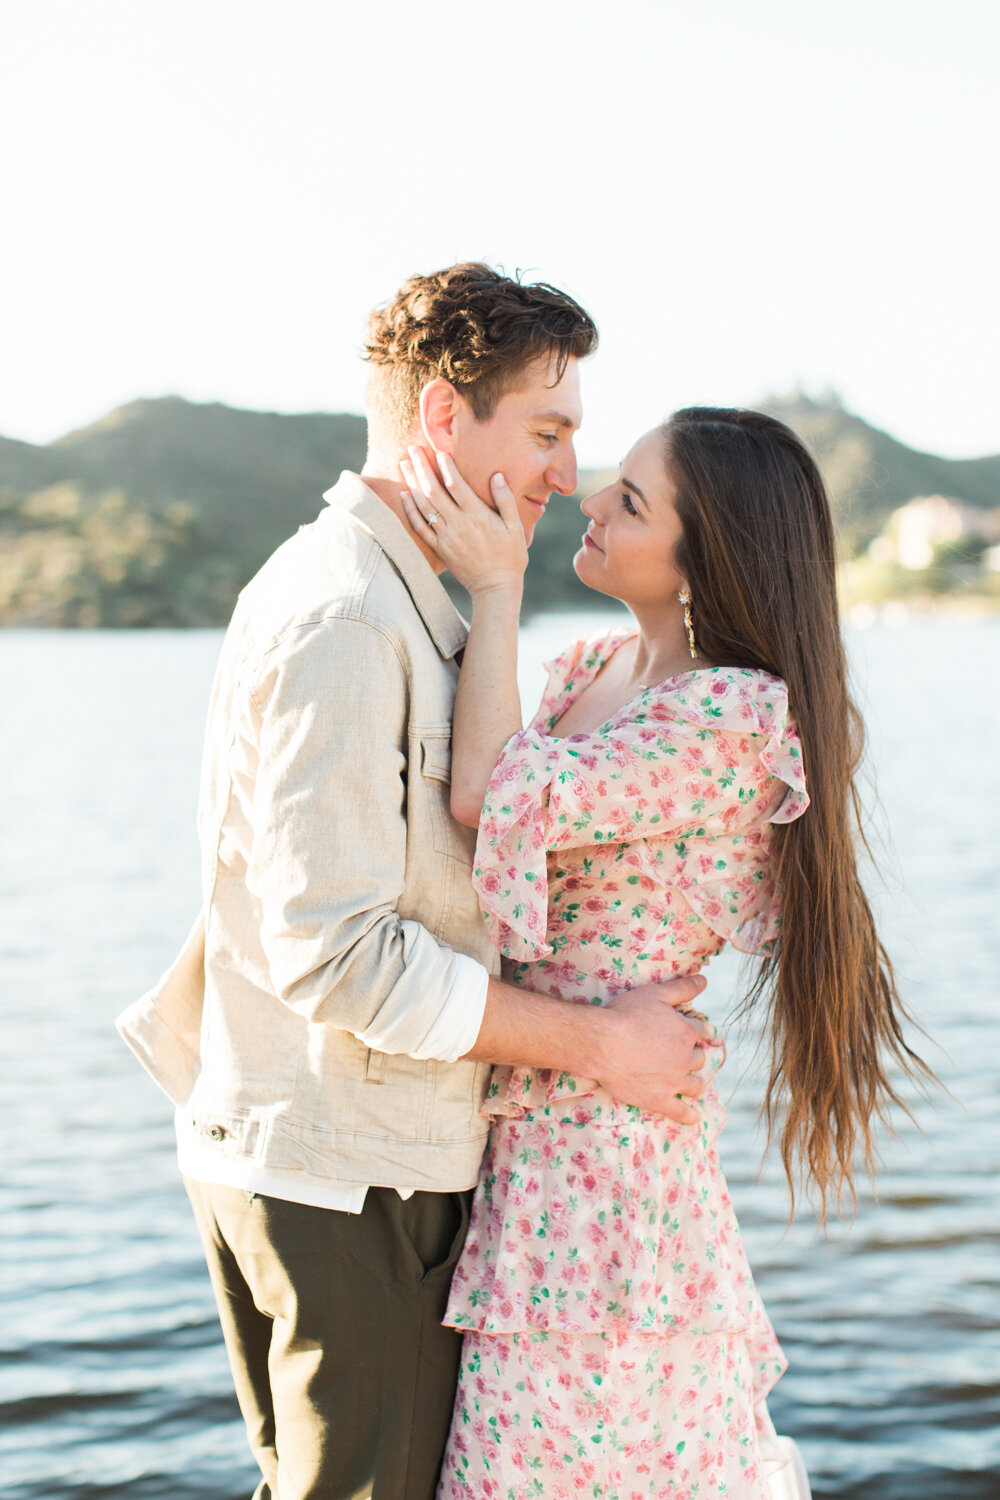 wisteria-photography.com | Wisteria Photography | Lake Sherwood | Weddings Engagement | Southern California Photographer-19.jpg